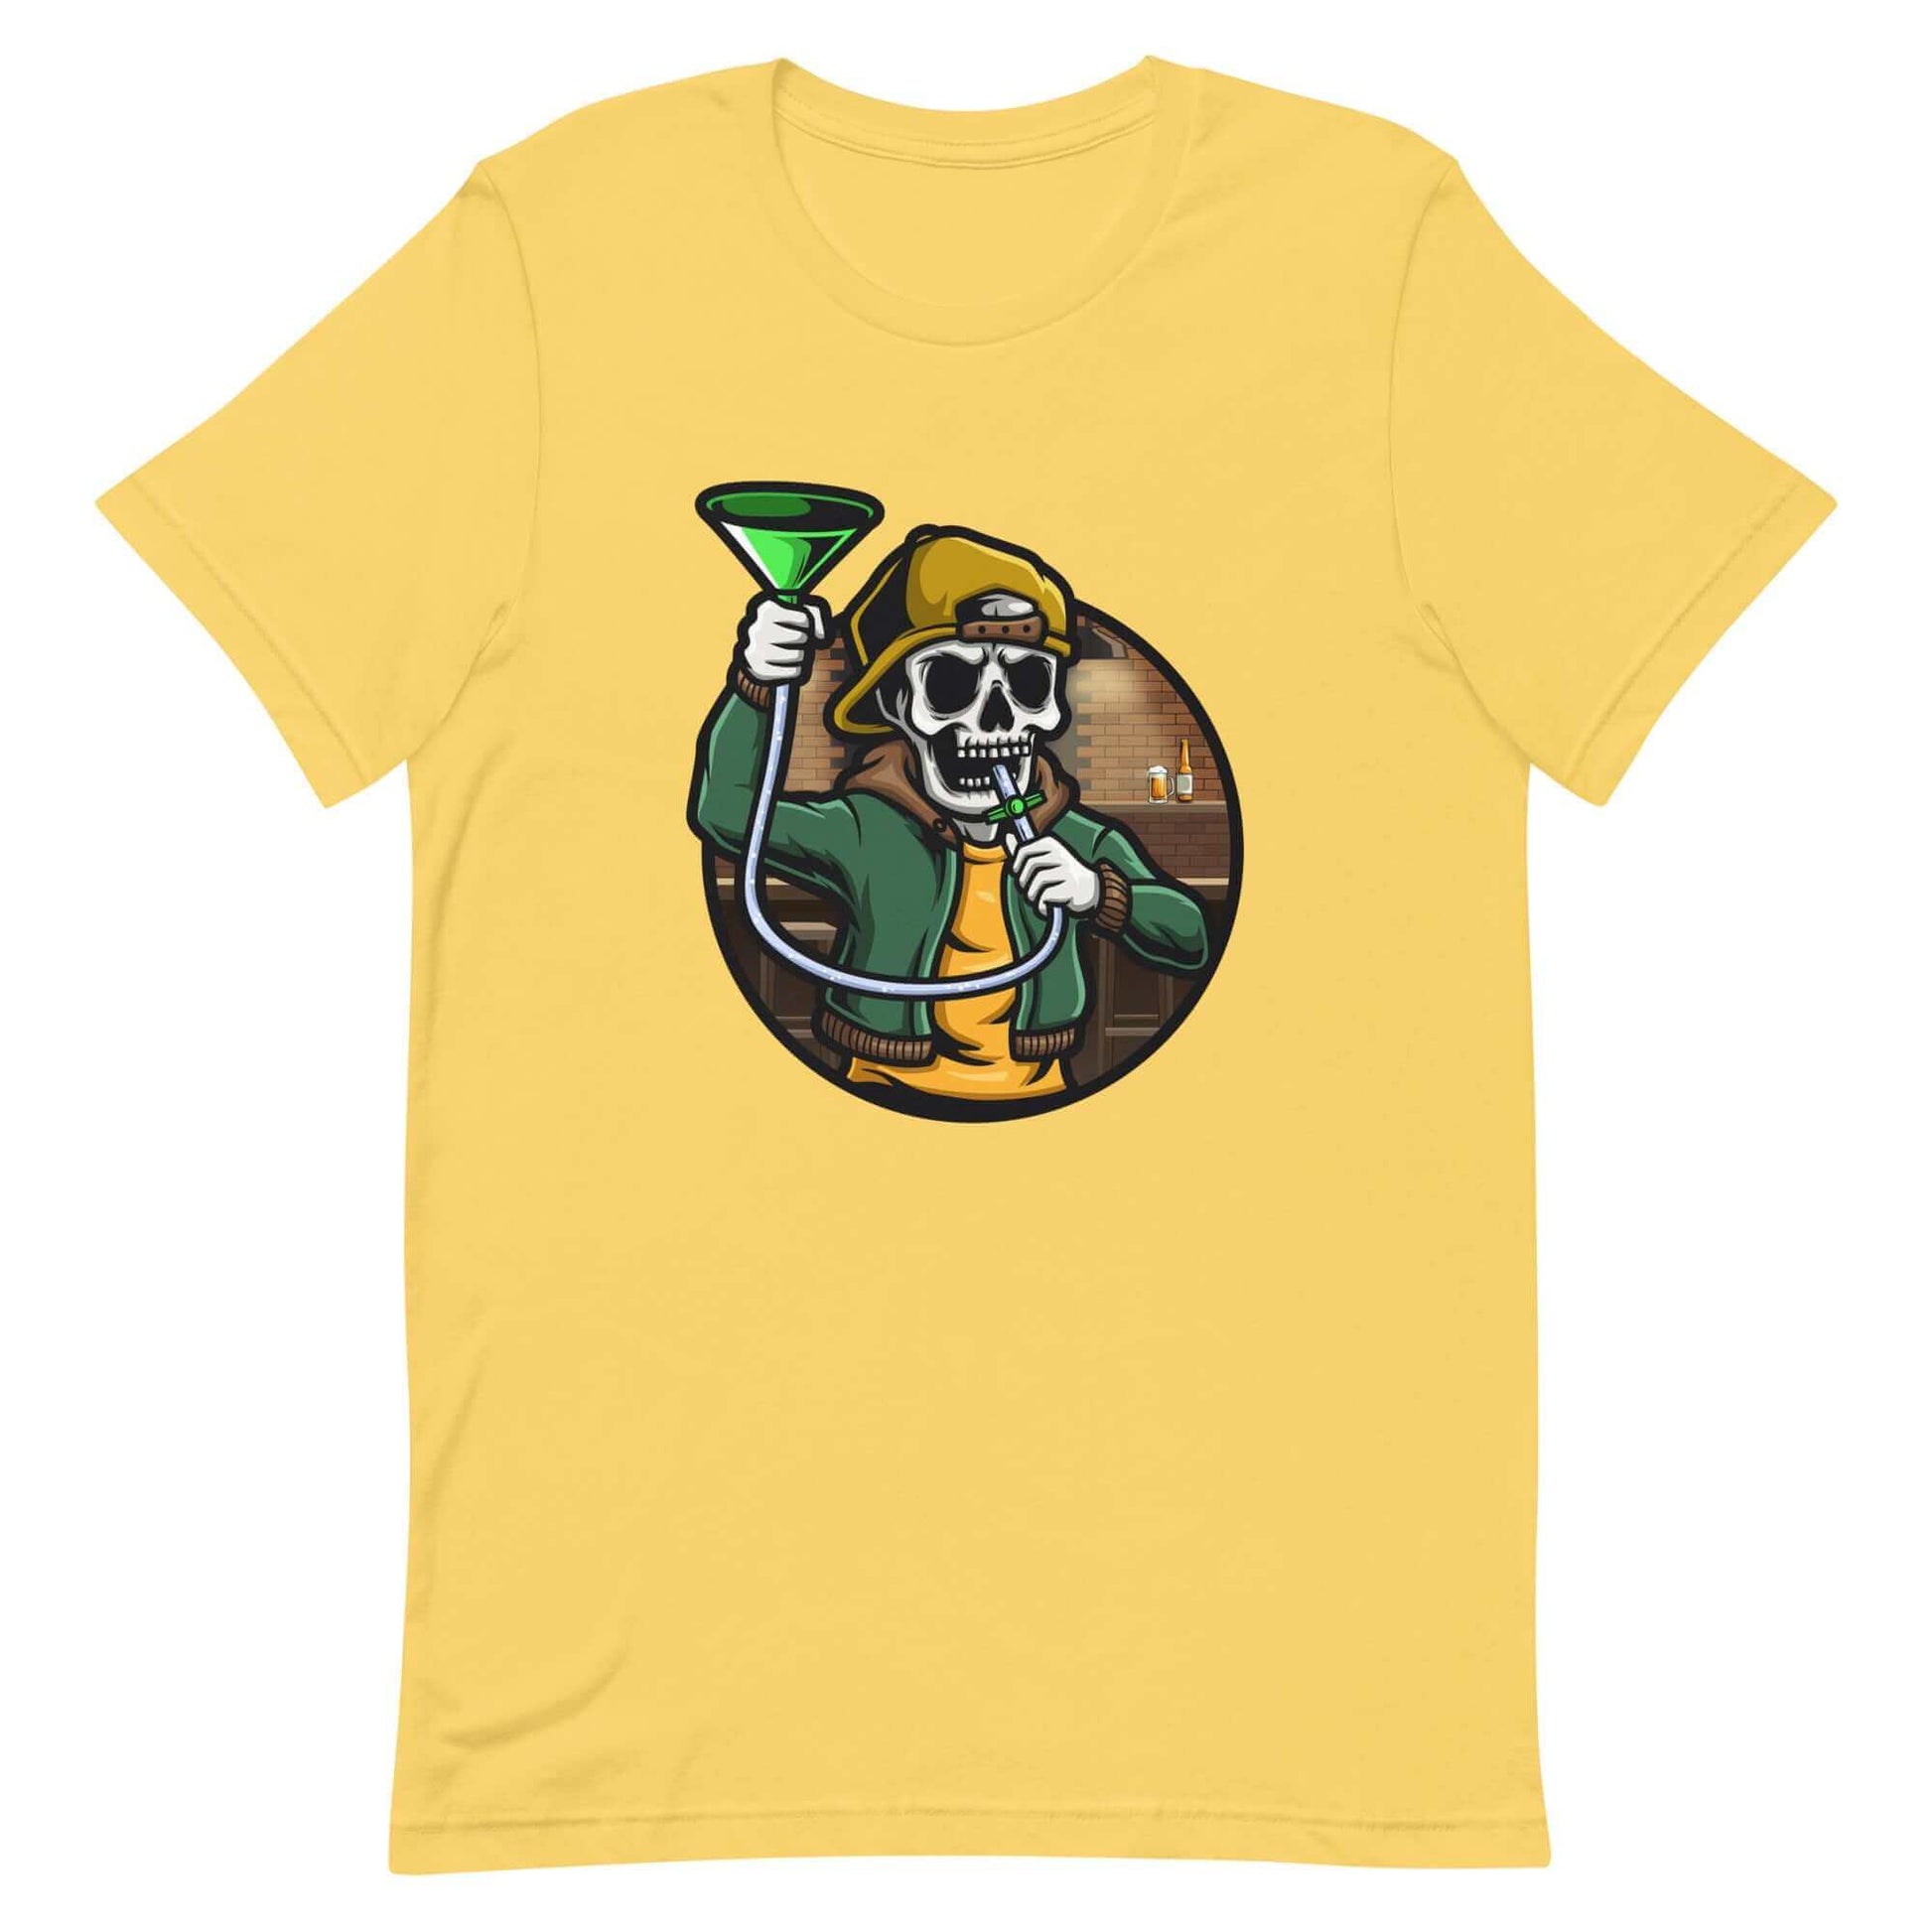 Beer Bong All Night - Unisex t-shirt - Yellow